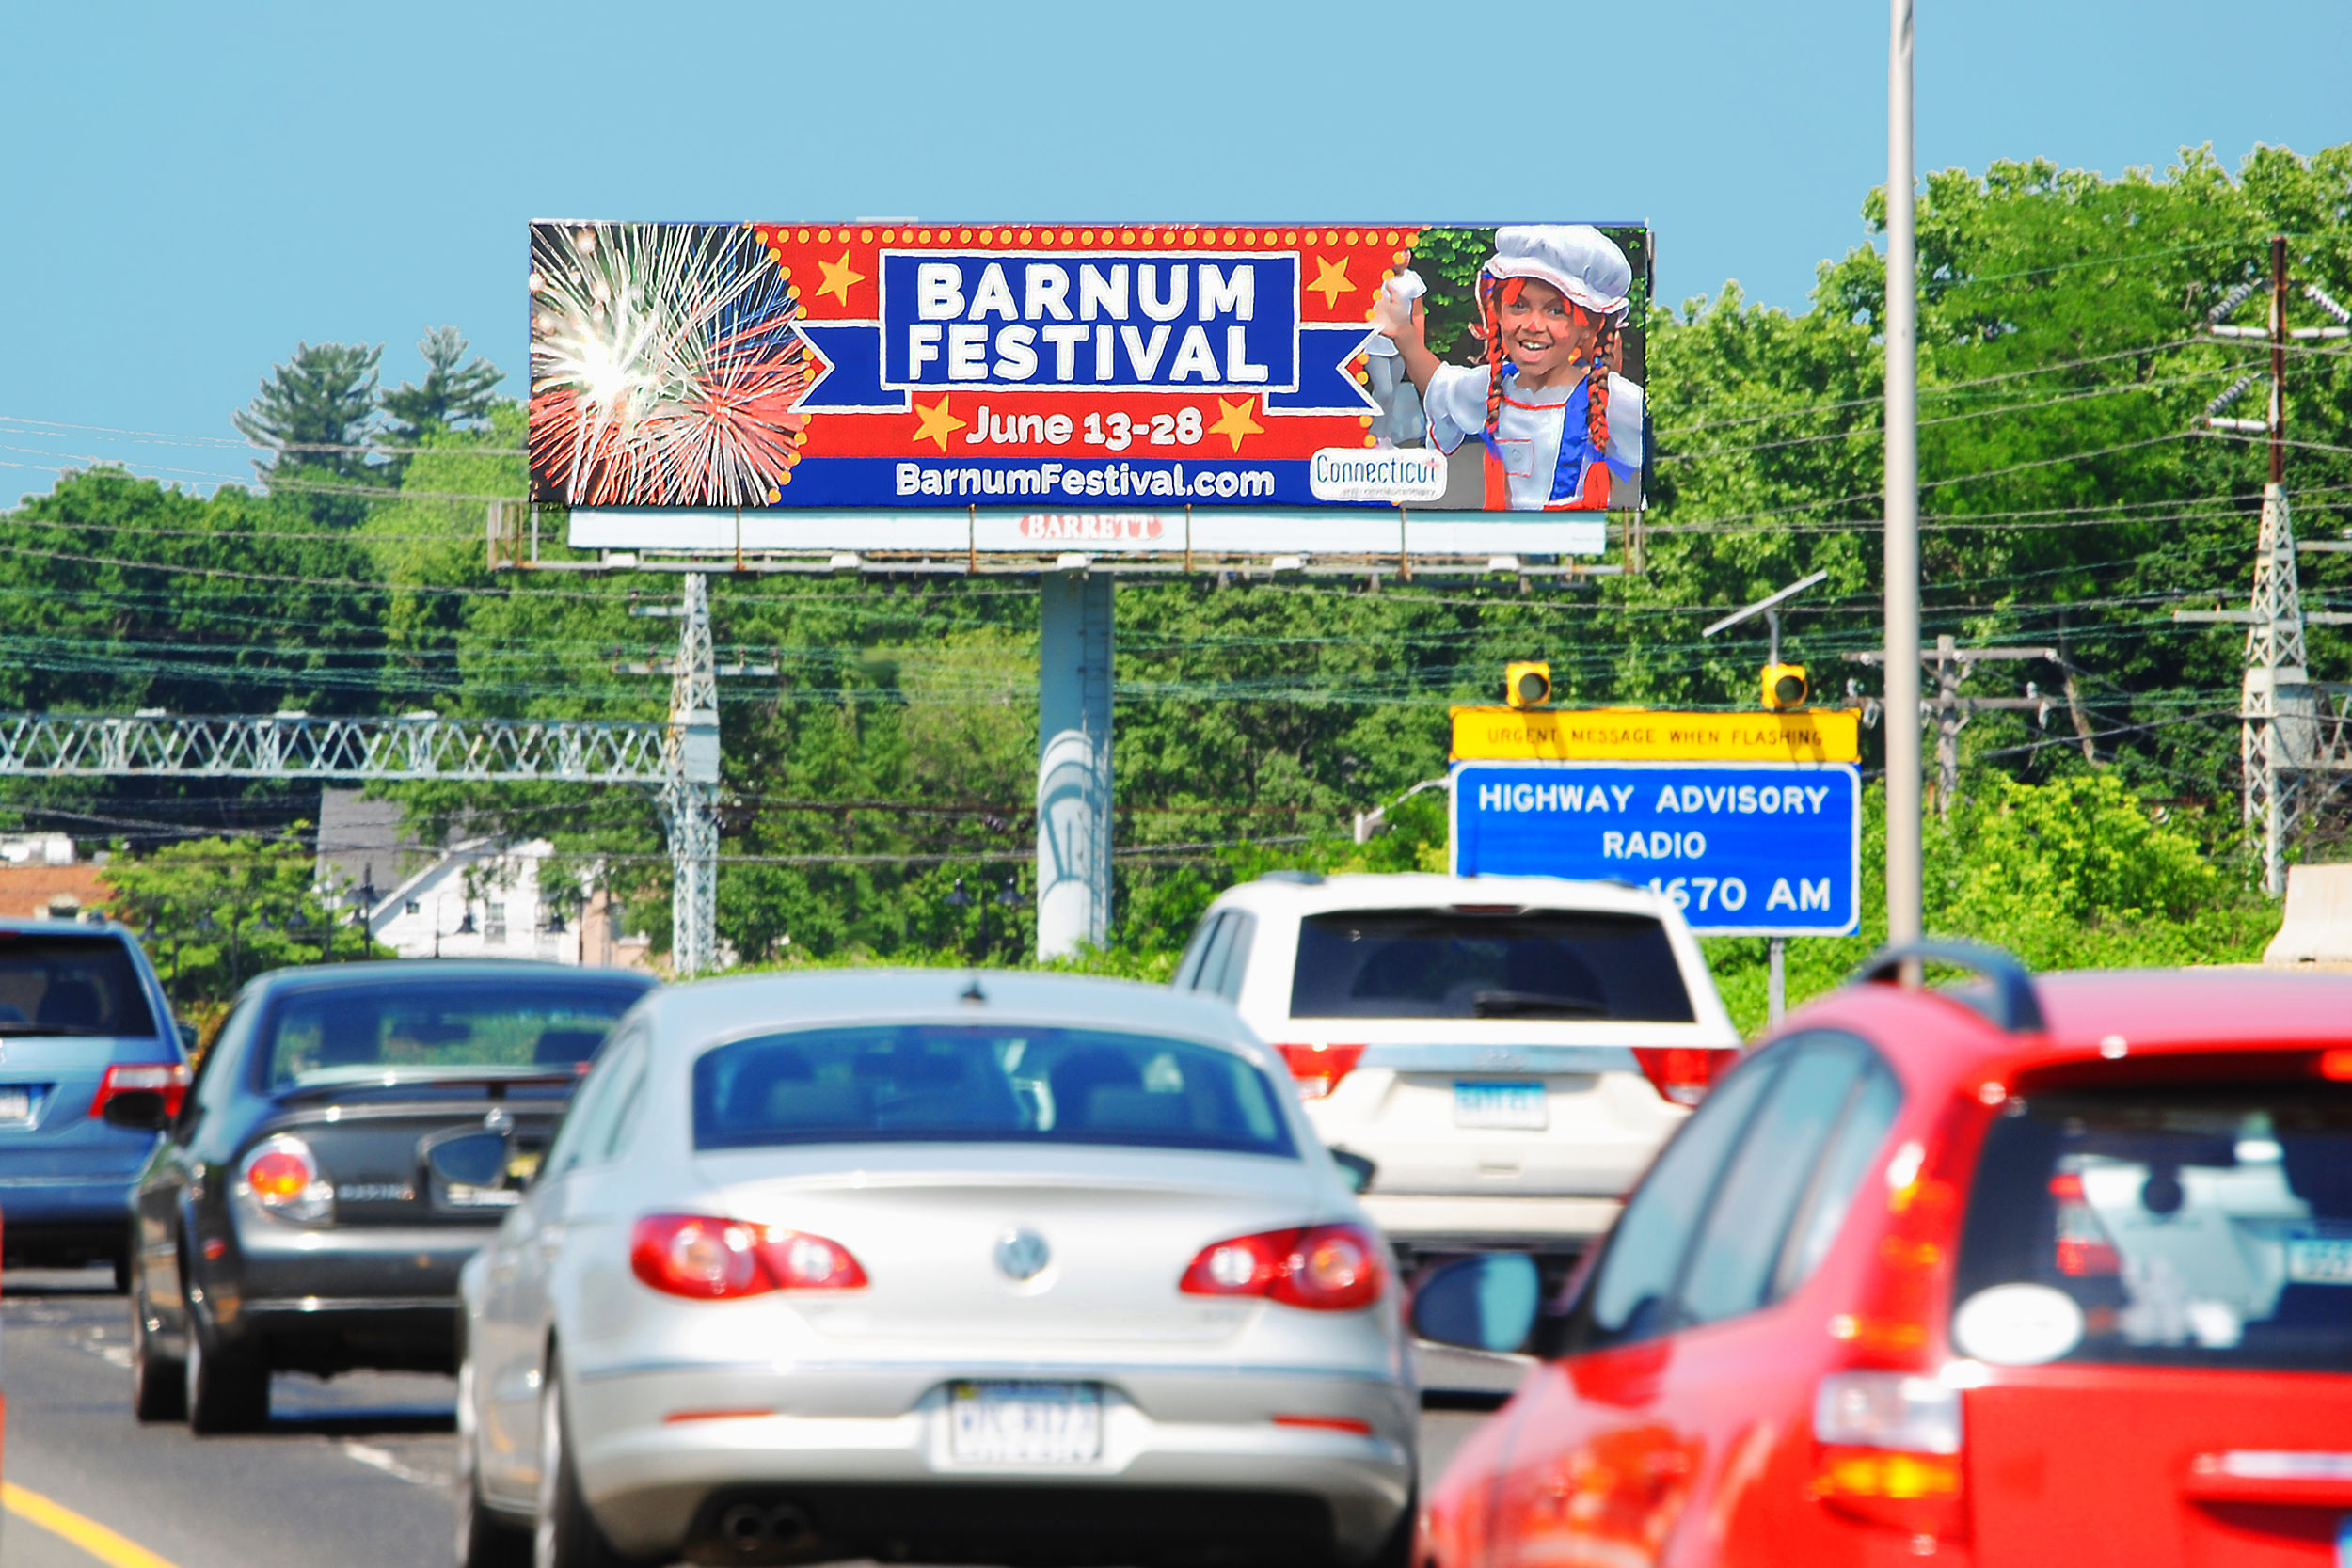 Billboard image of Barnum Festival